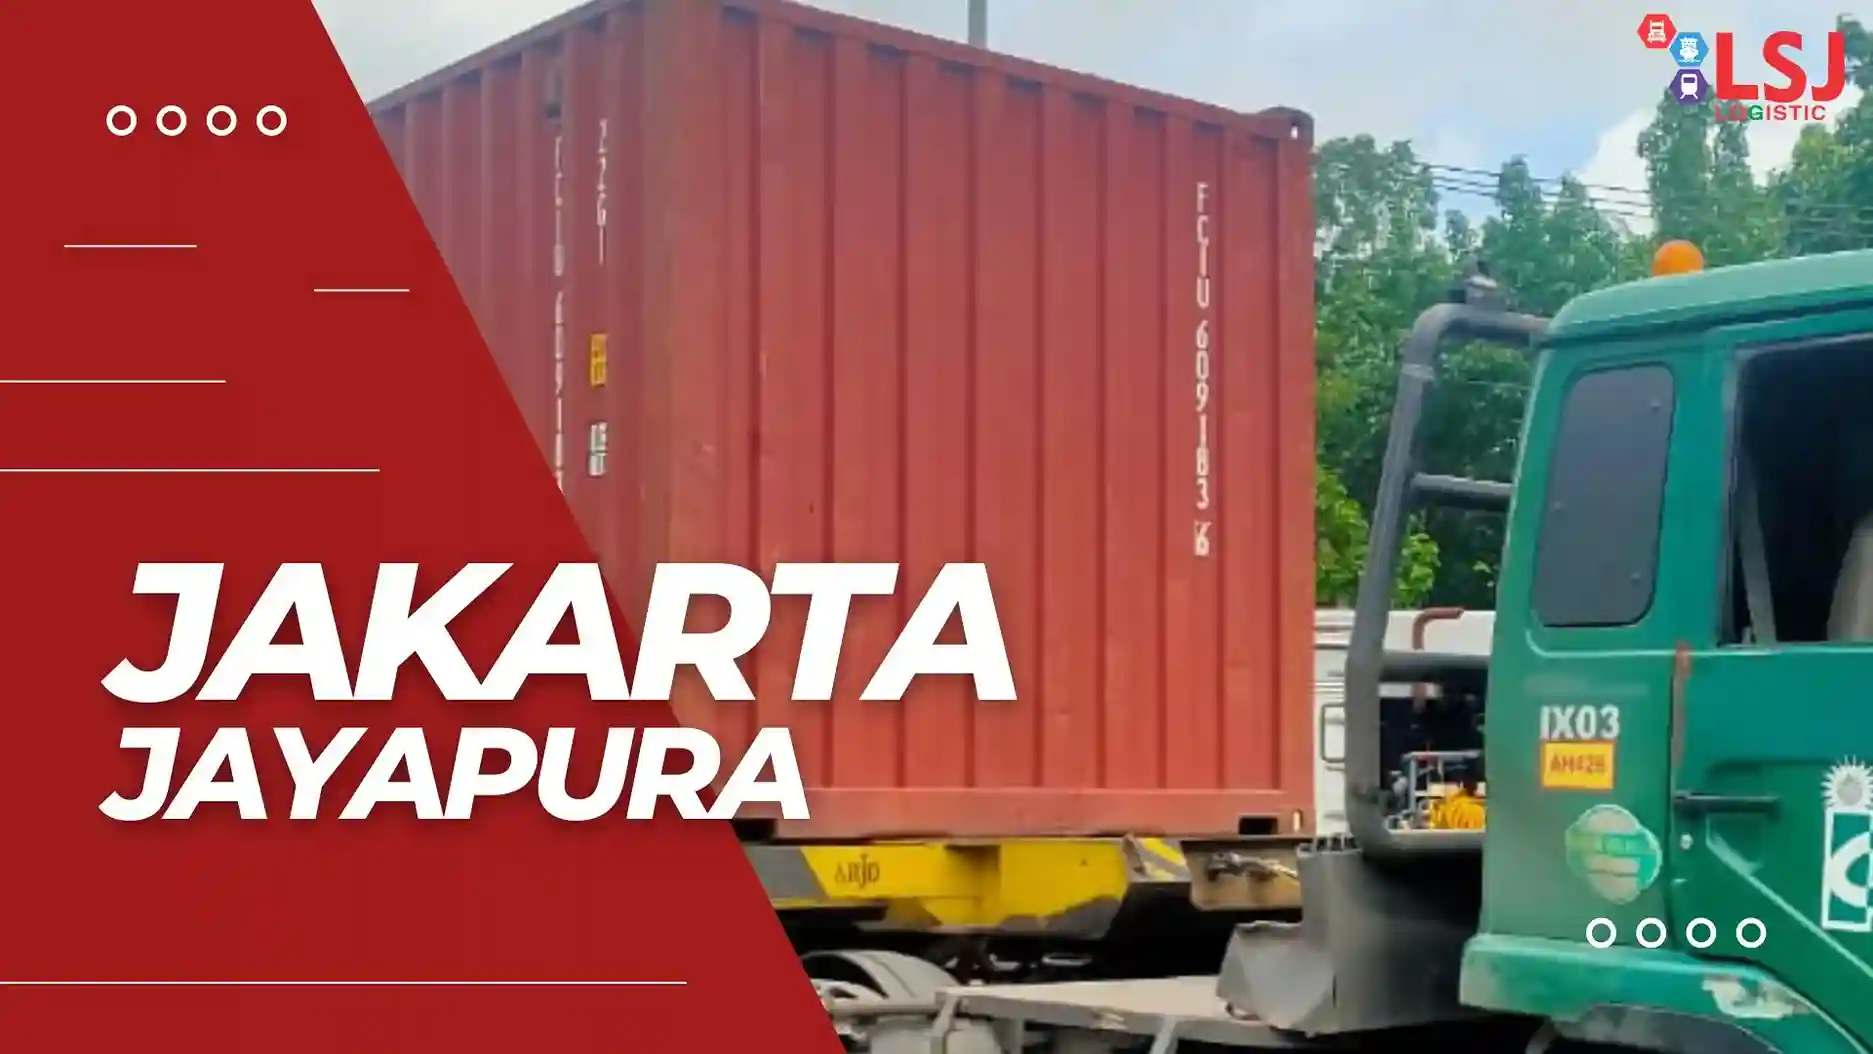 Harga Pengiriman Container Jakarta Jayapura